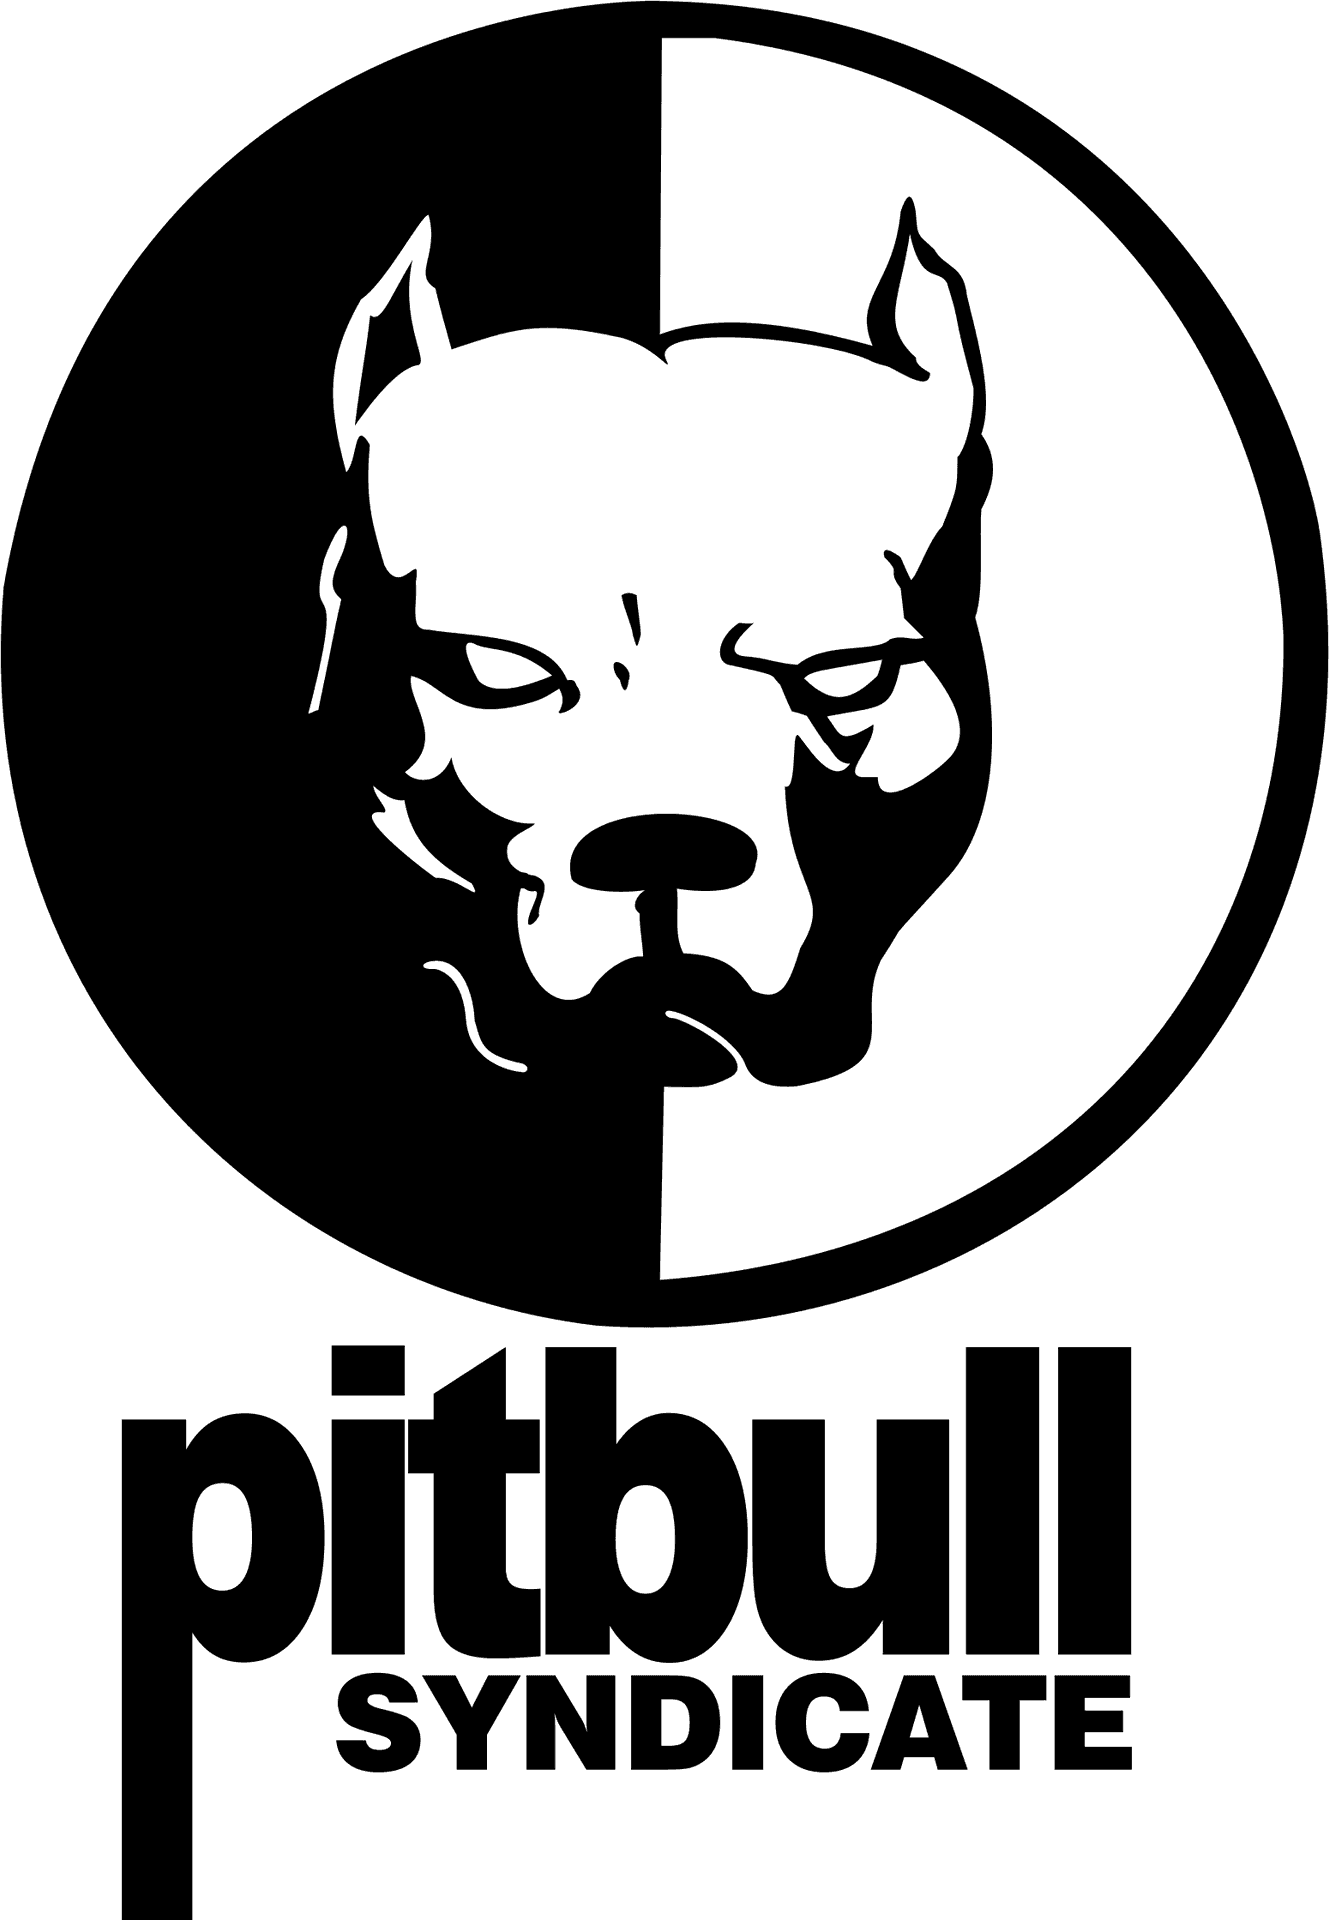 Pitbull Syndicate Logo PNG